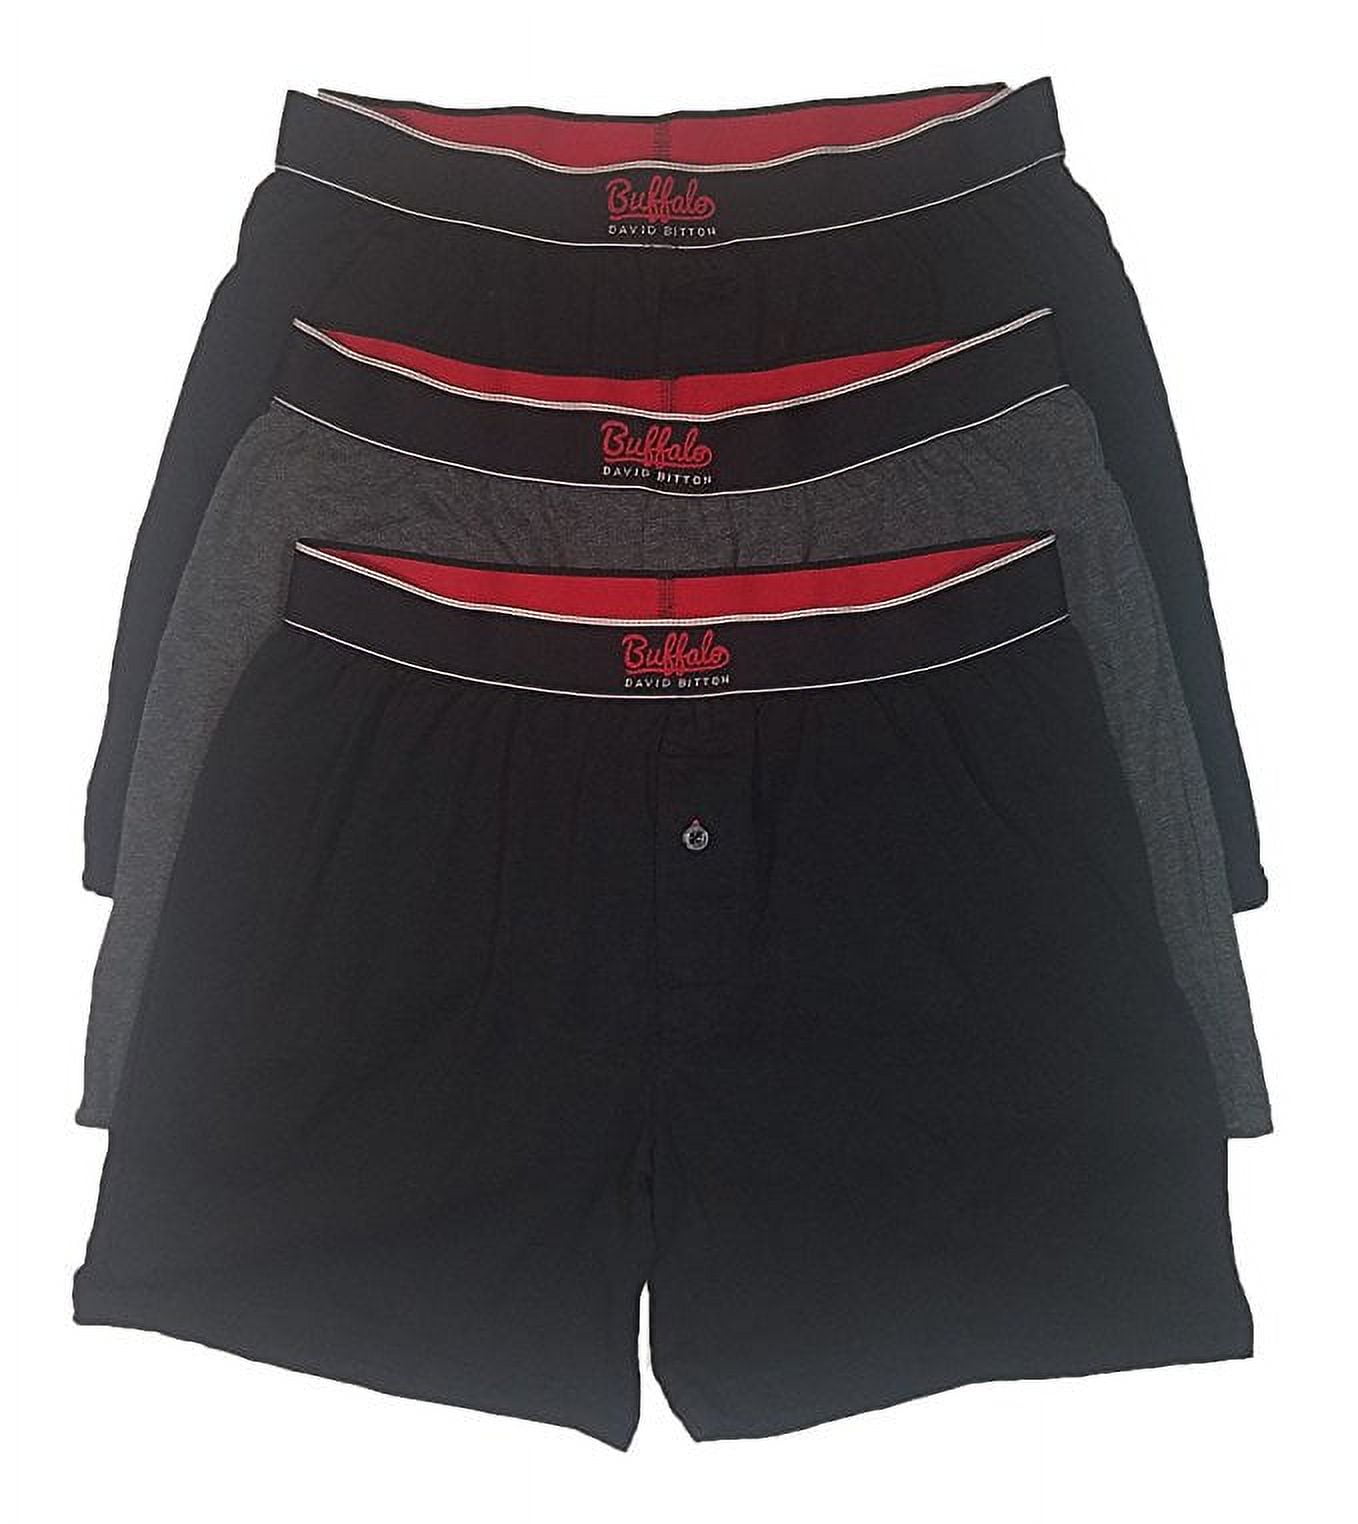 Buffalo Men's Knit Boxer Underwear 3-pack Black XL Boxers Men's